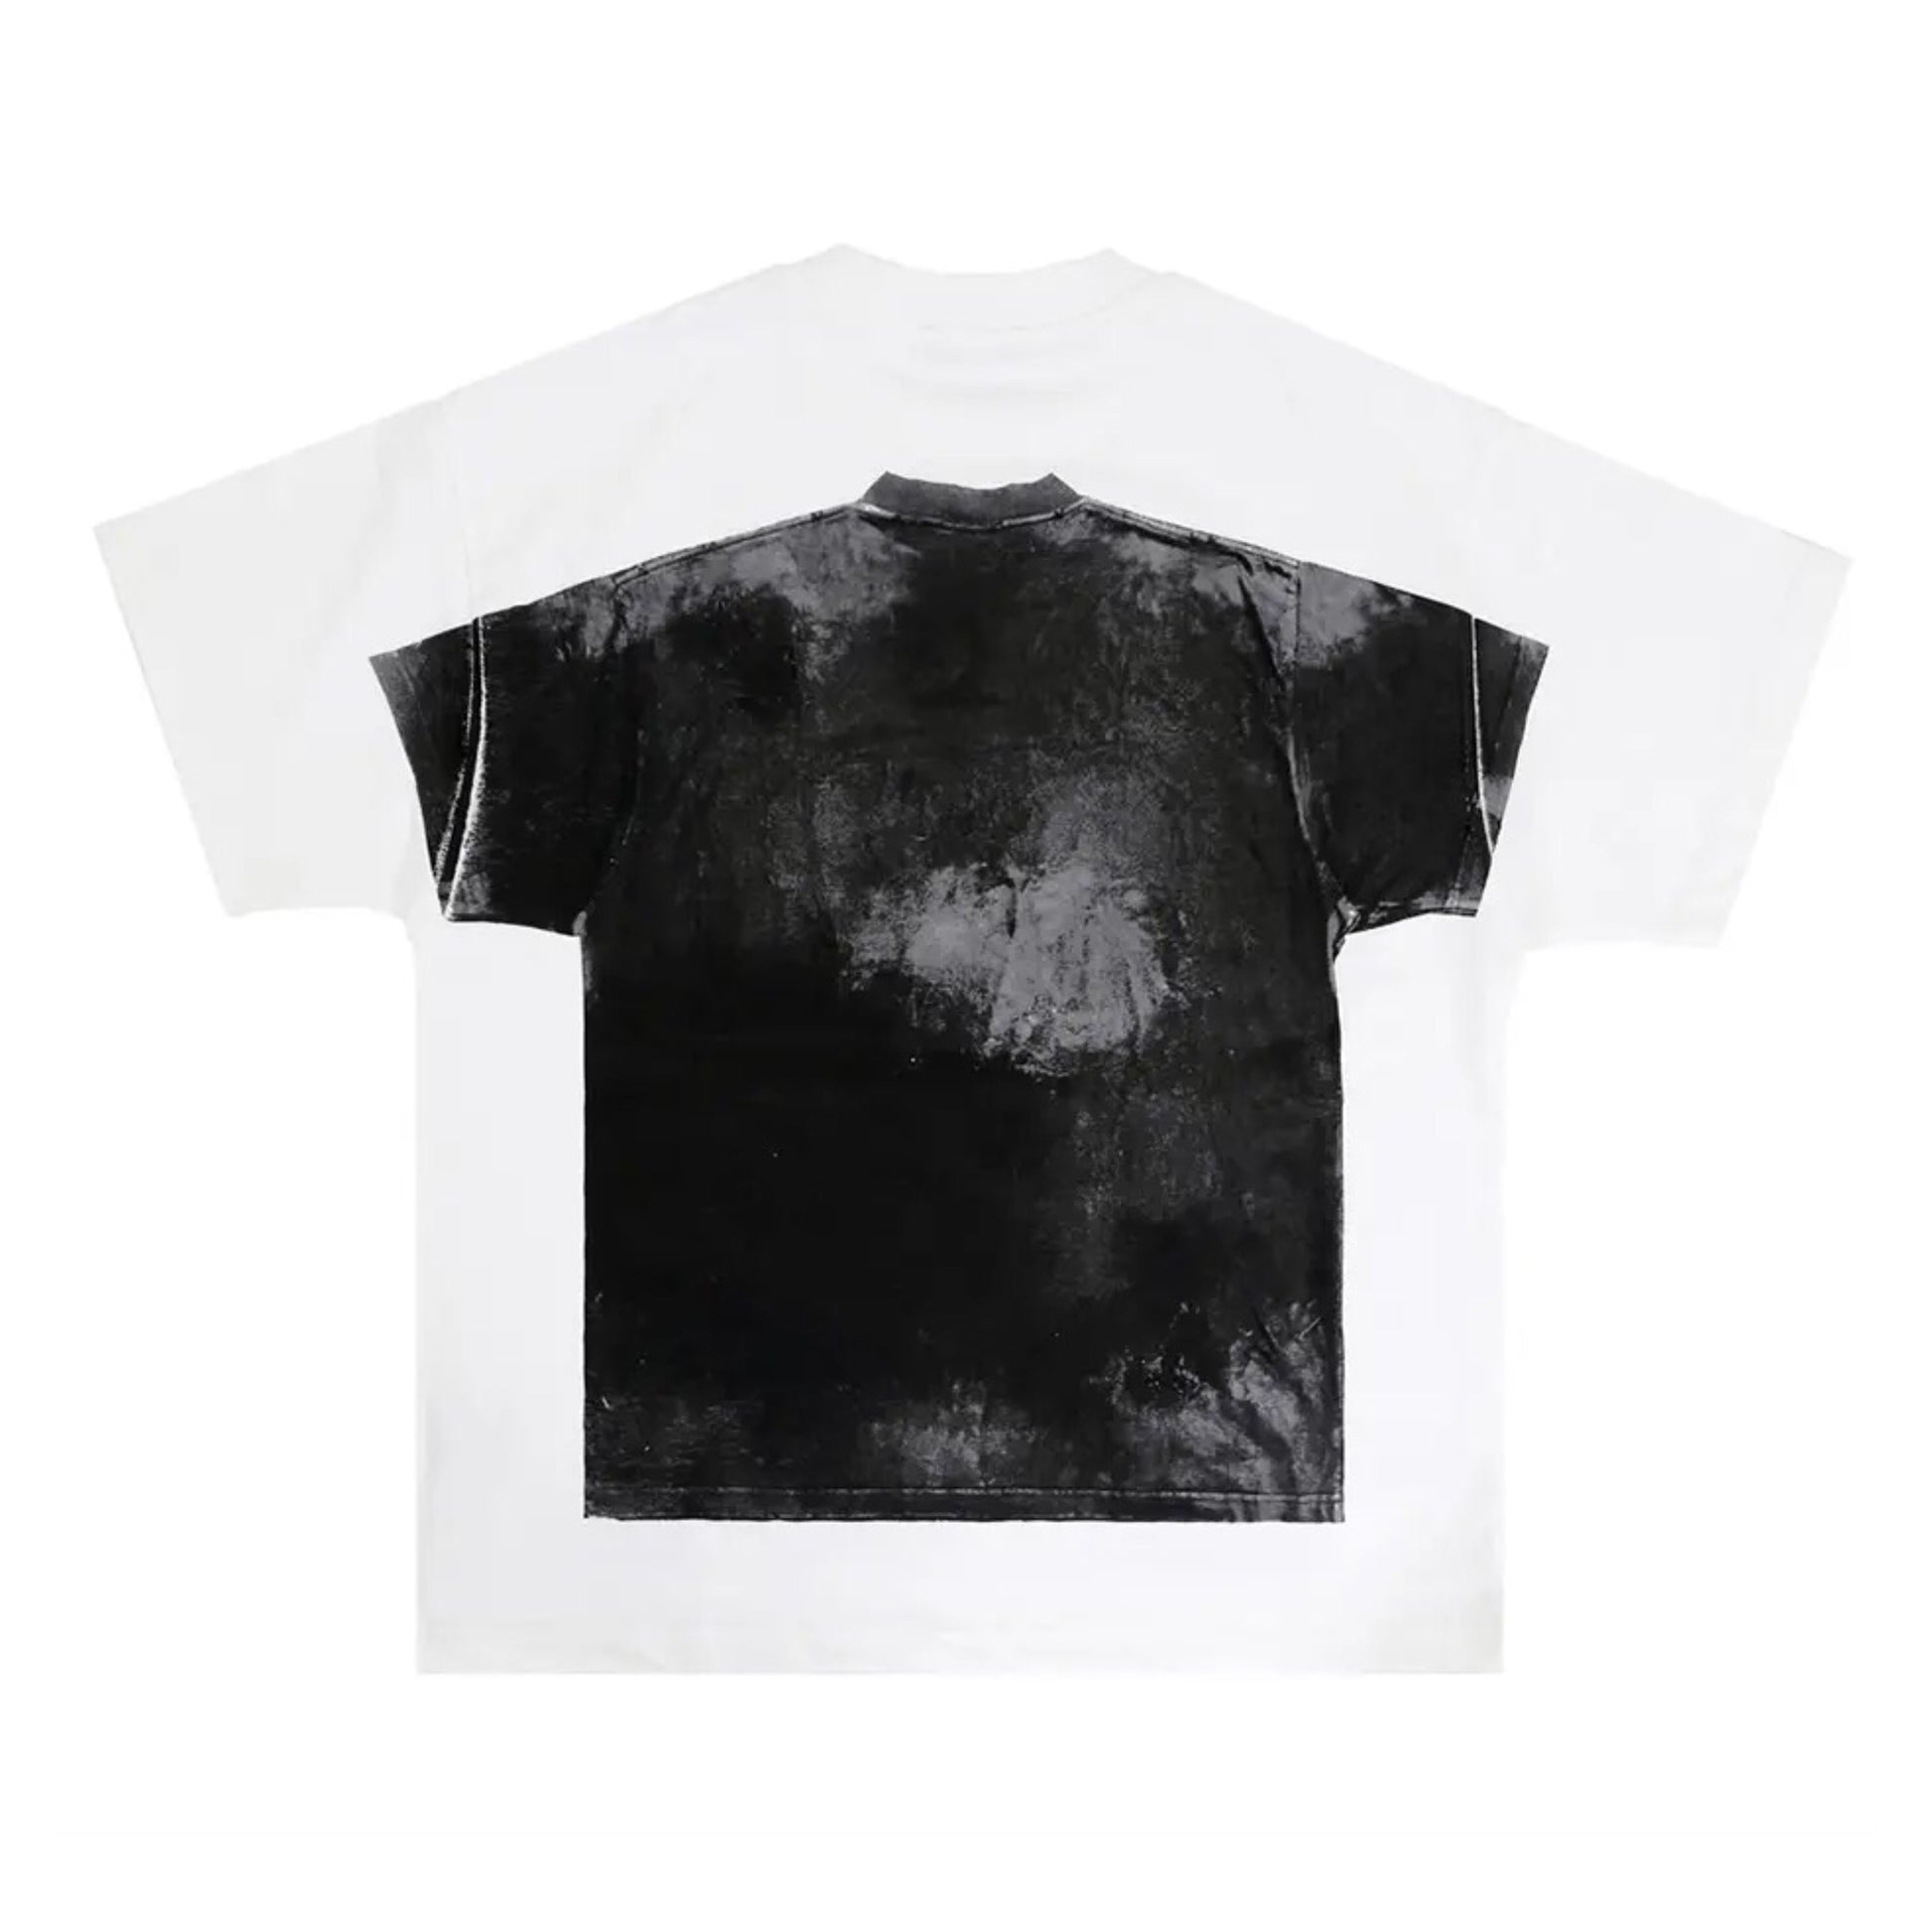 Tprint Graphic T-shirt | Unisex Graphic Tshirts - White